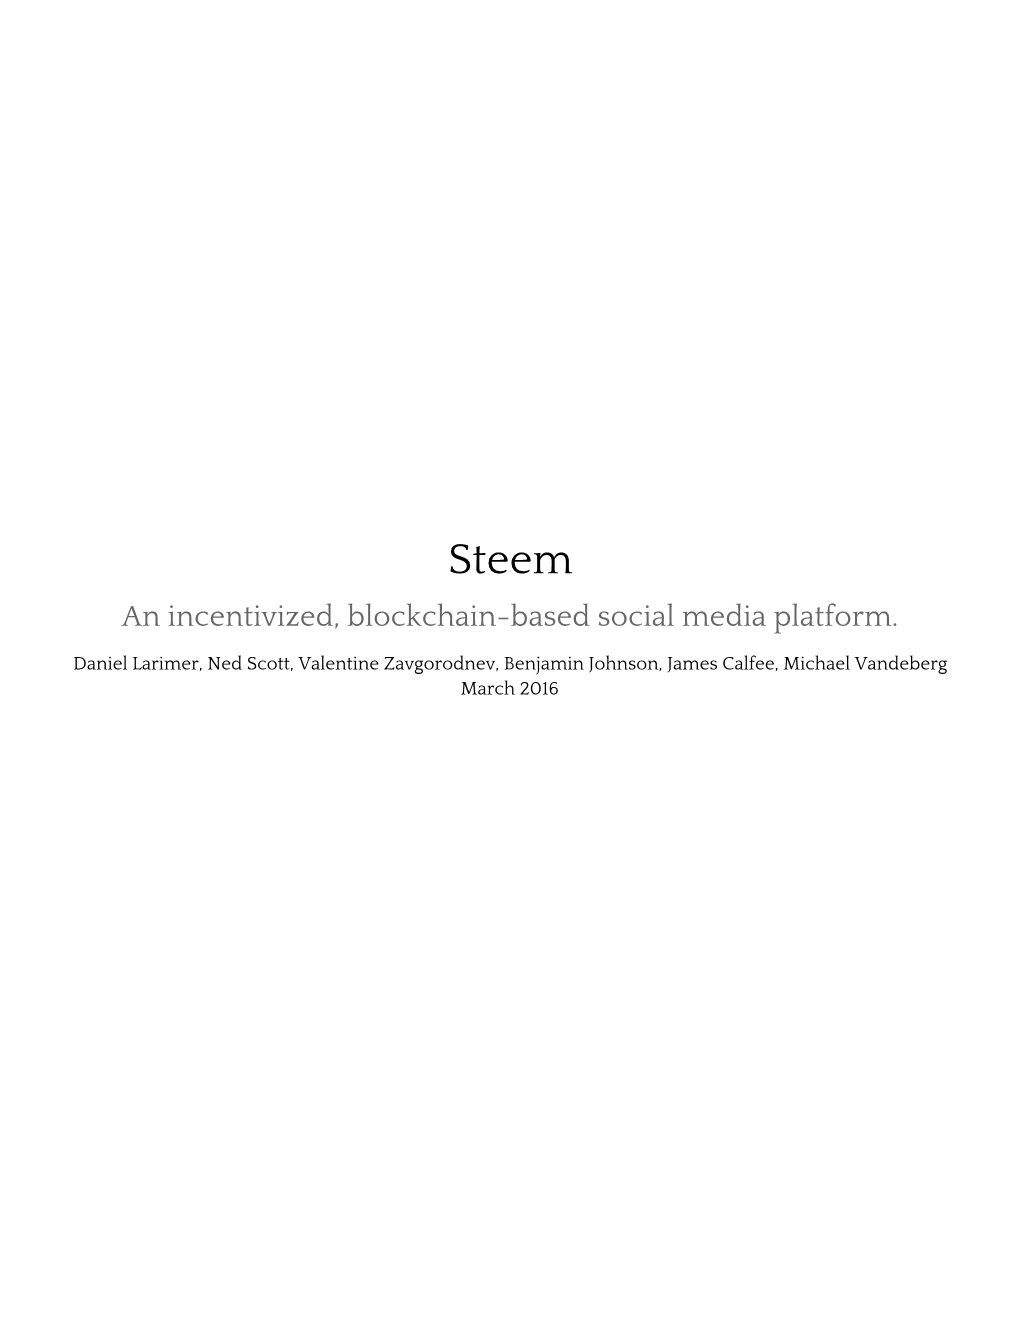 Steem an Incentivized, Blockchain-Based Social Media Platform